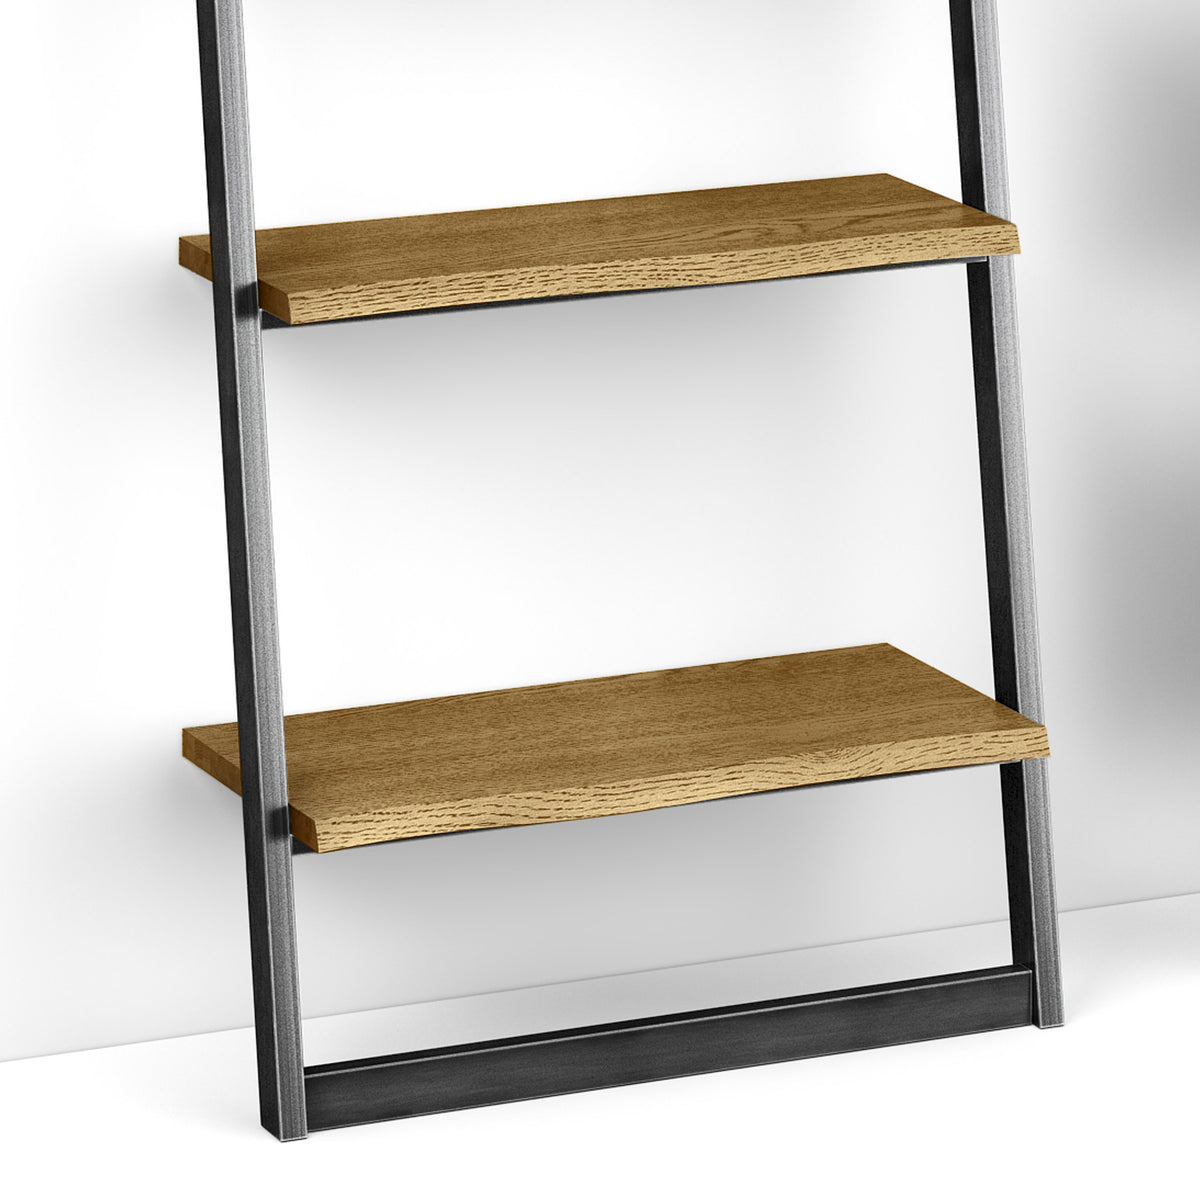 Isaac Oak Ladder Bookcase from Roseland Furniture